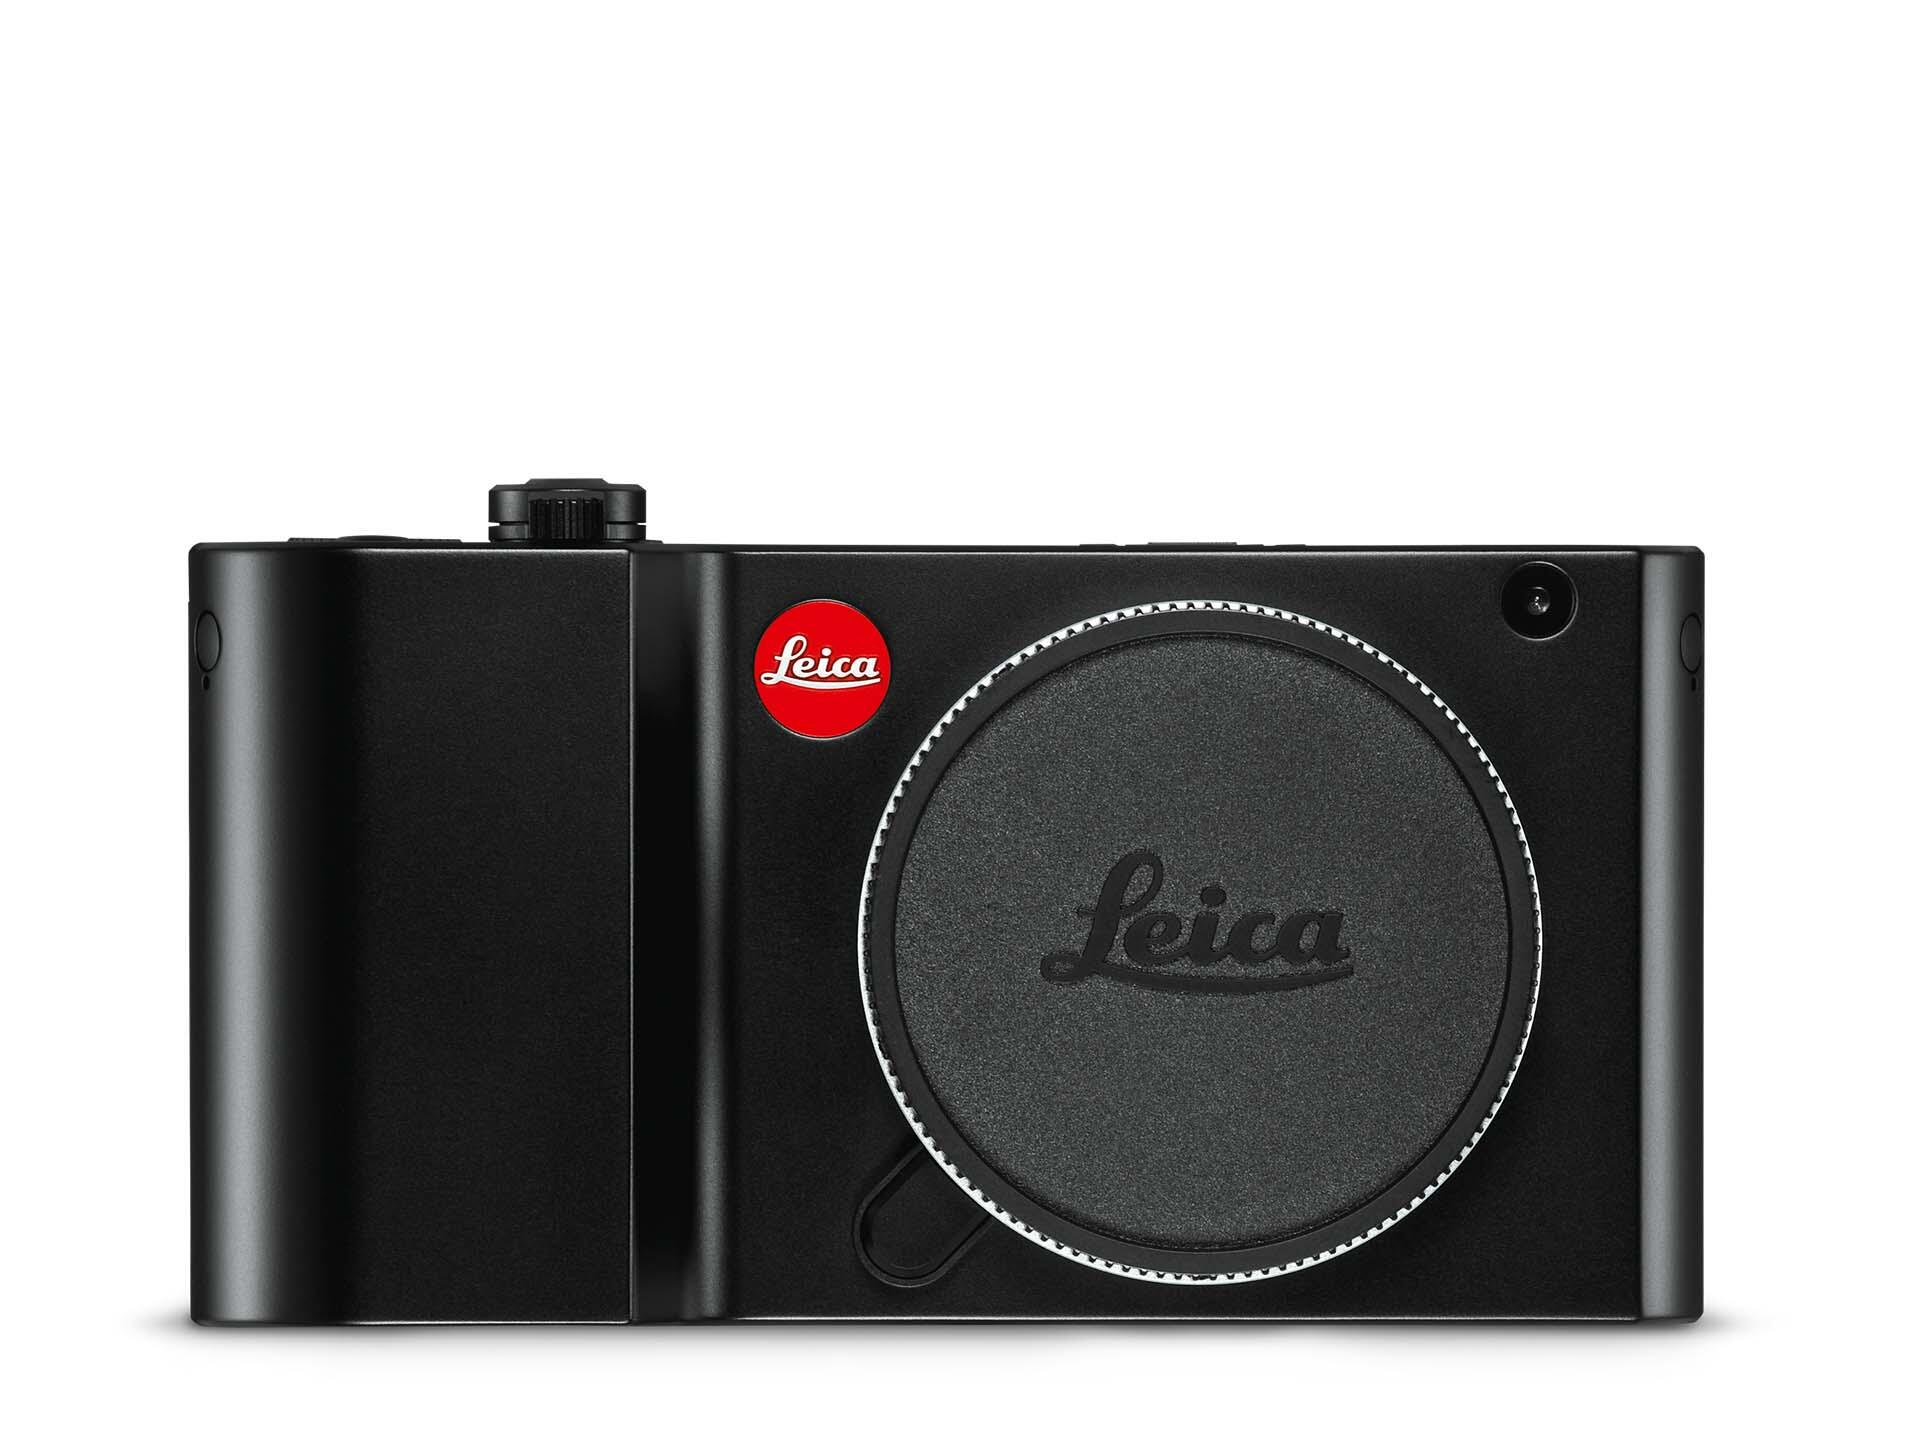 Leica TL2 | Leica Camera AG